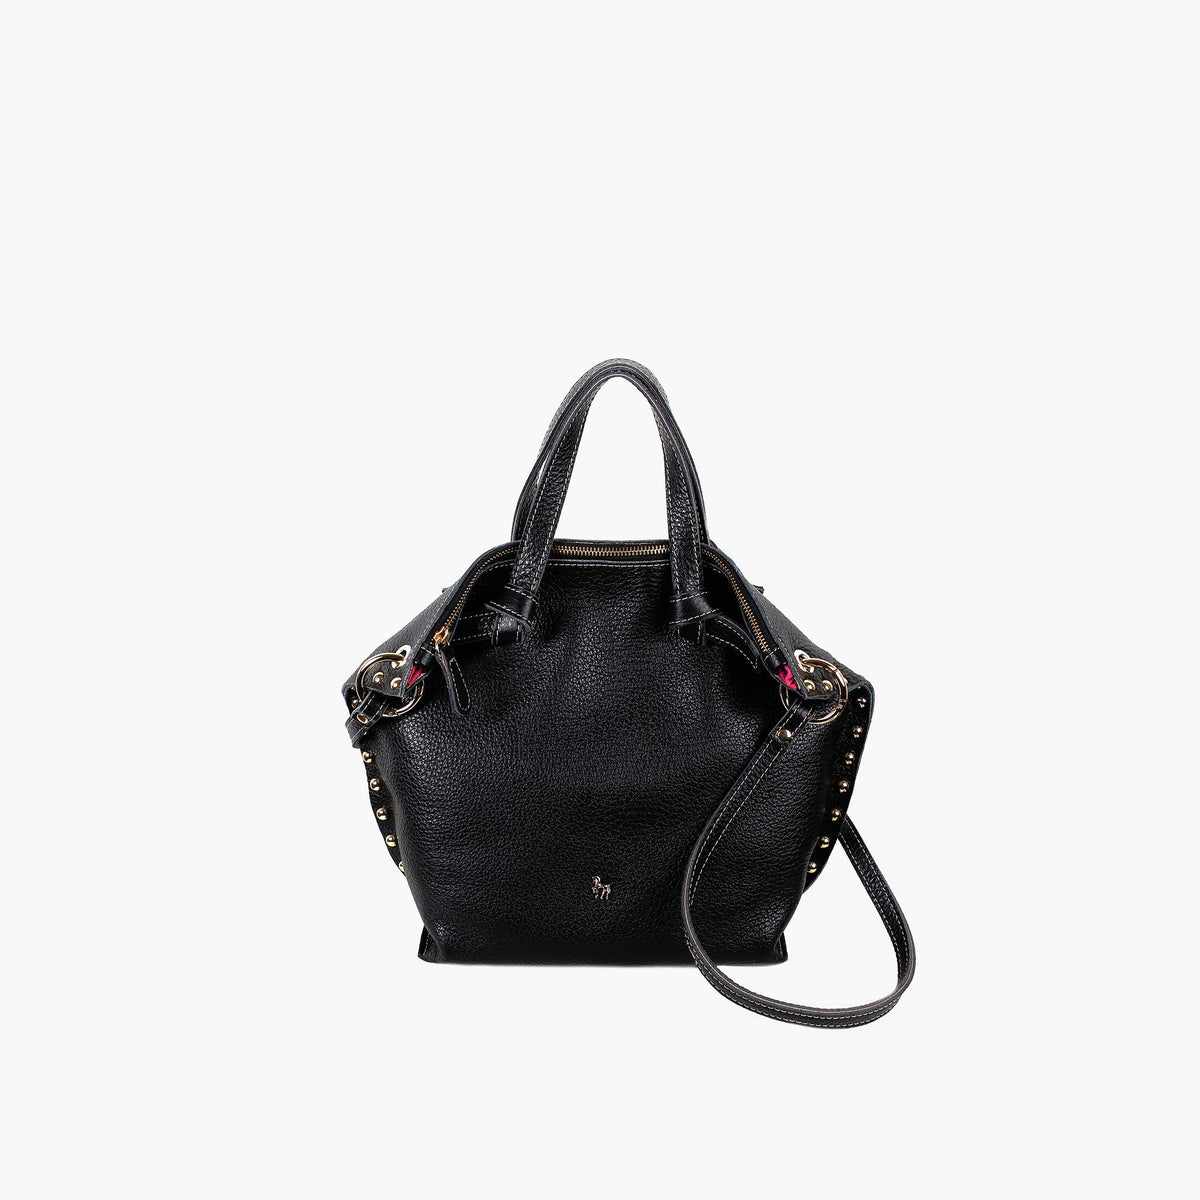 Taylor Black - Leather bag for women - Petusco Spain – Petusco Heritage